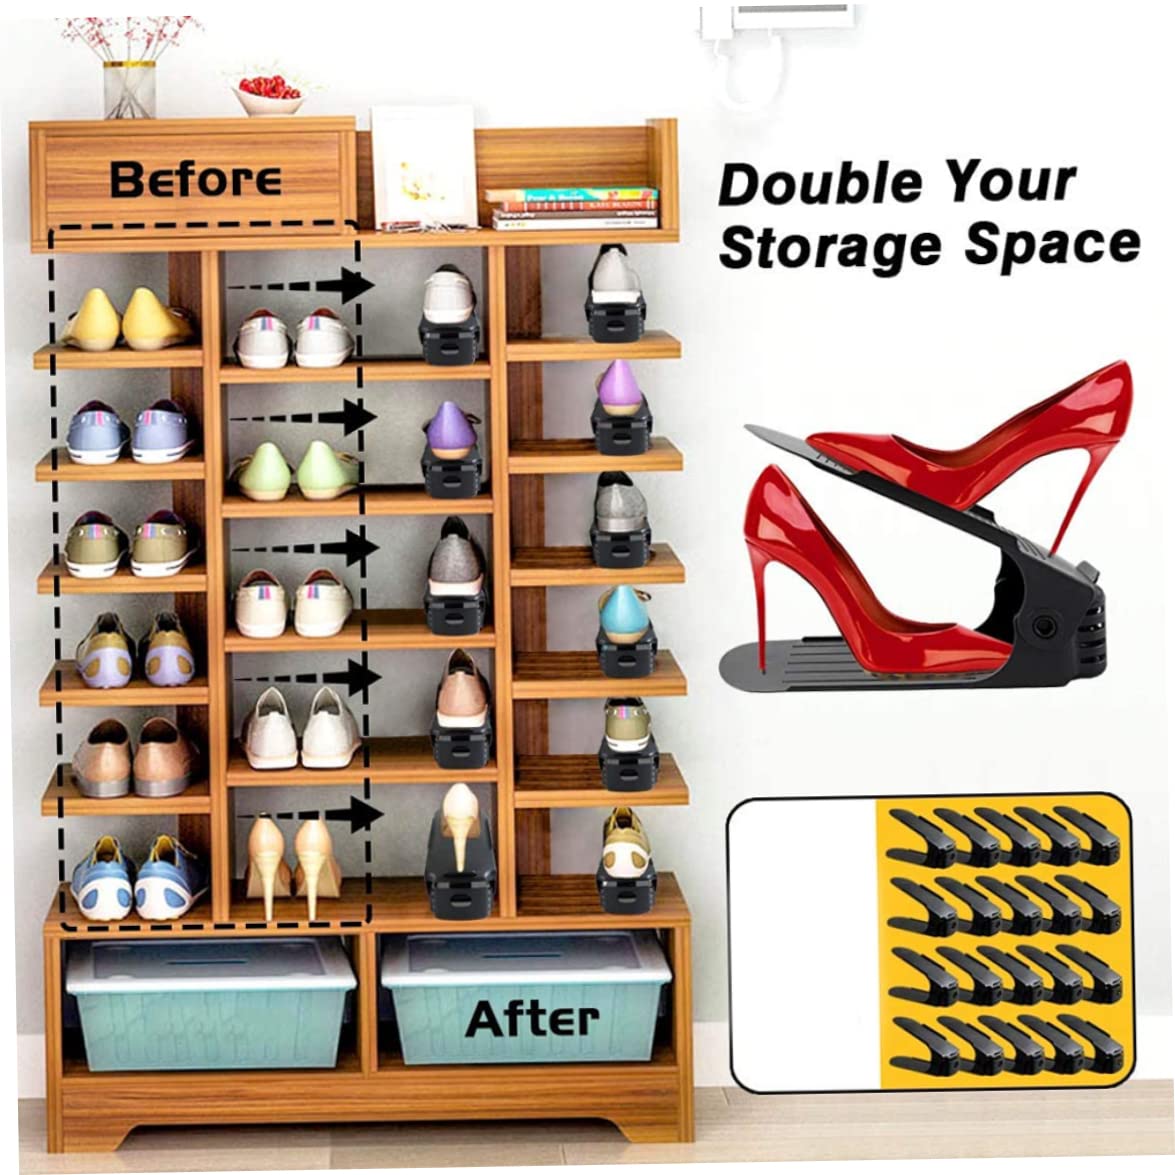 Shoe Slots Organizer - [50% OFF] Adjustable Double Deck Shoe Rack Holder Storage Space Saver